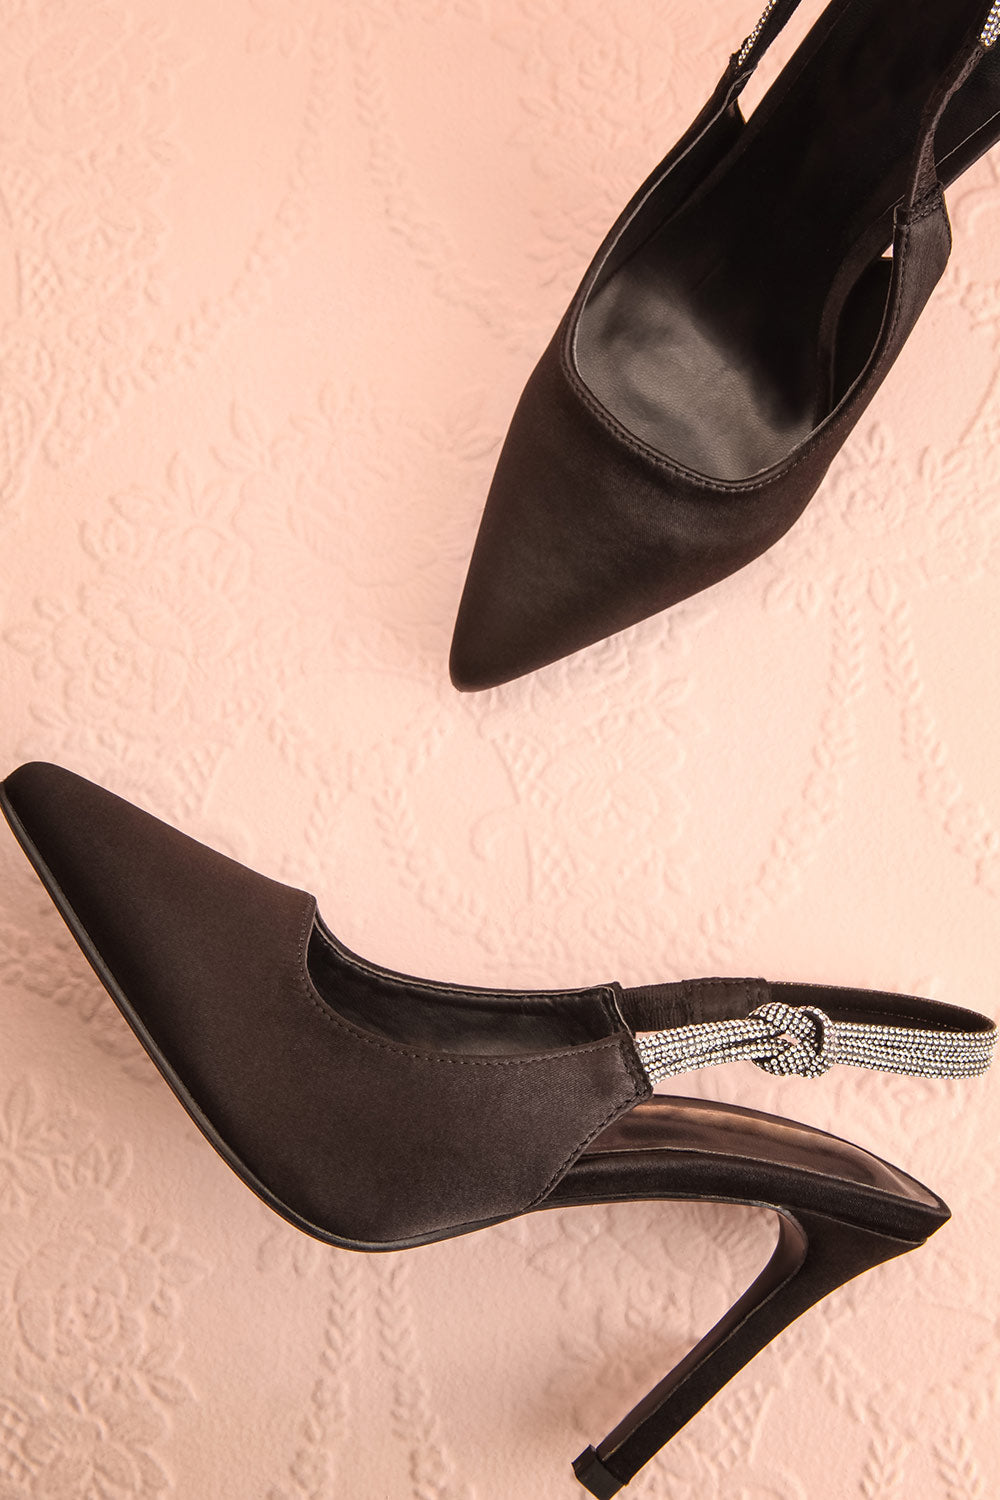 EQWLJWE Women鈥檚 High Chunky Closed Toe Block Heels Pointed Toe Wedding  Party Elegant Slip On Pumps Shoes - Walmart.com